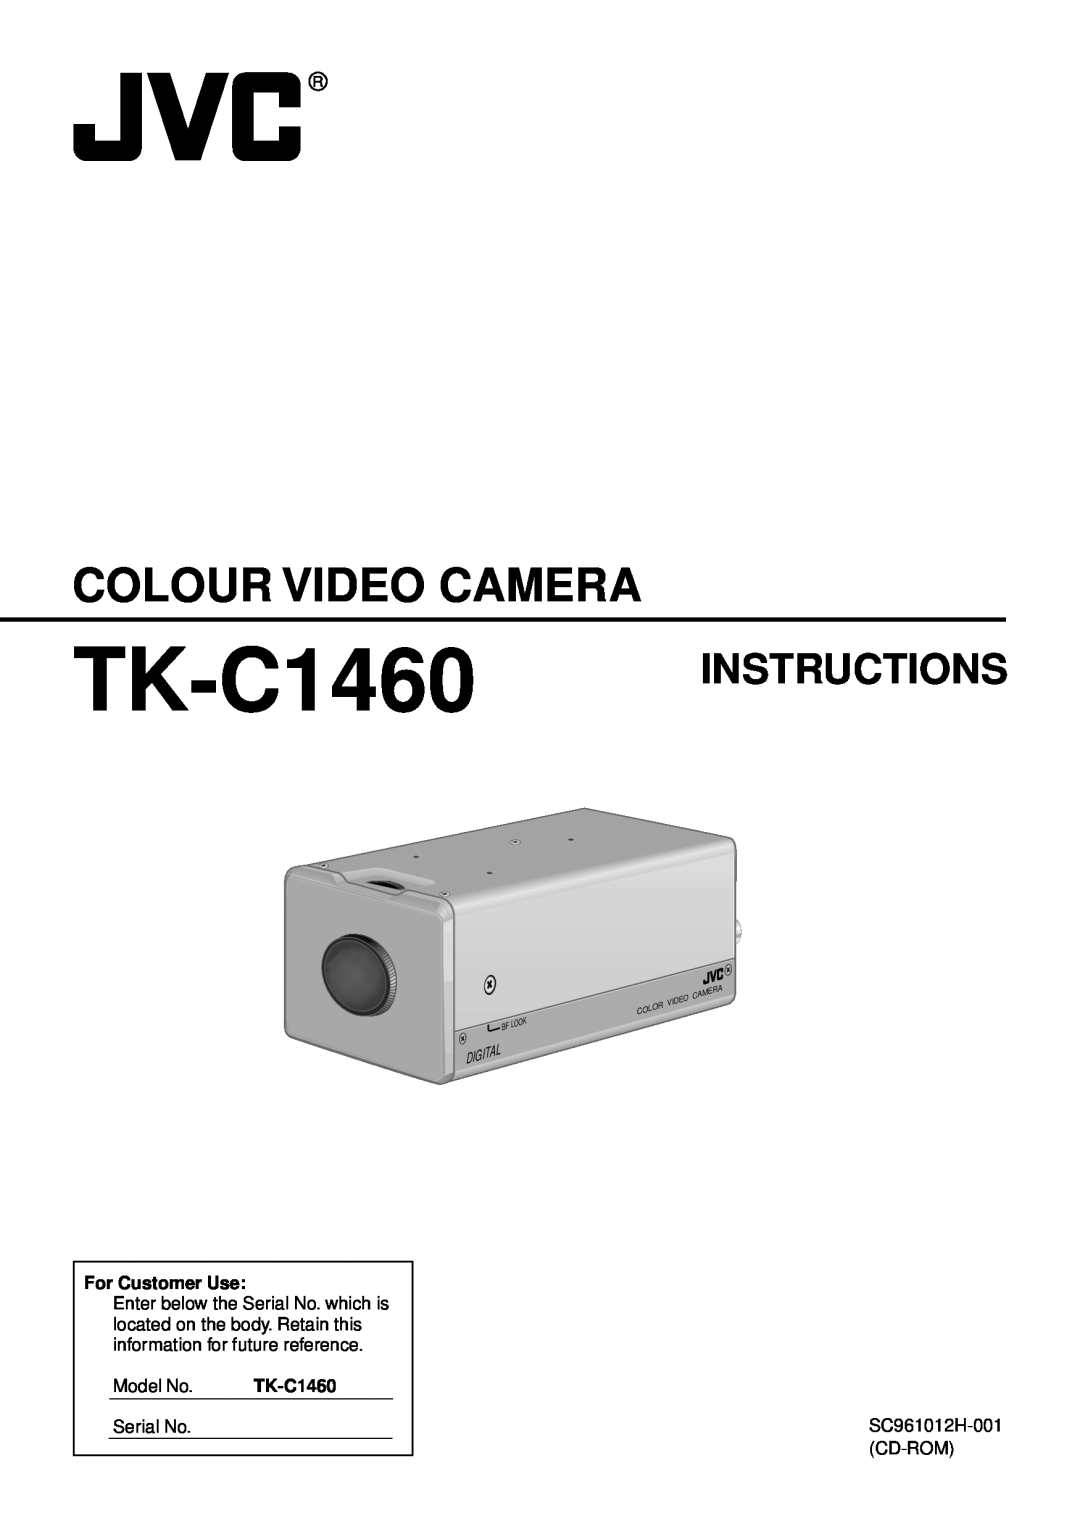 JVC manual Colour Video Camera, TK-C1460 INSTRUCTIONS, For Customer Use, Digital, Look 